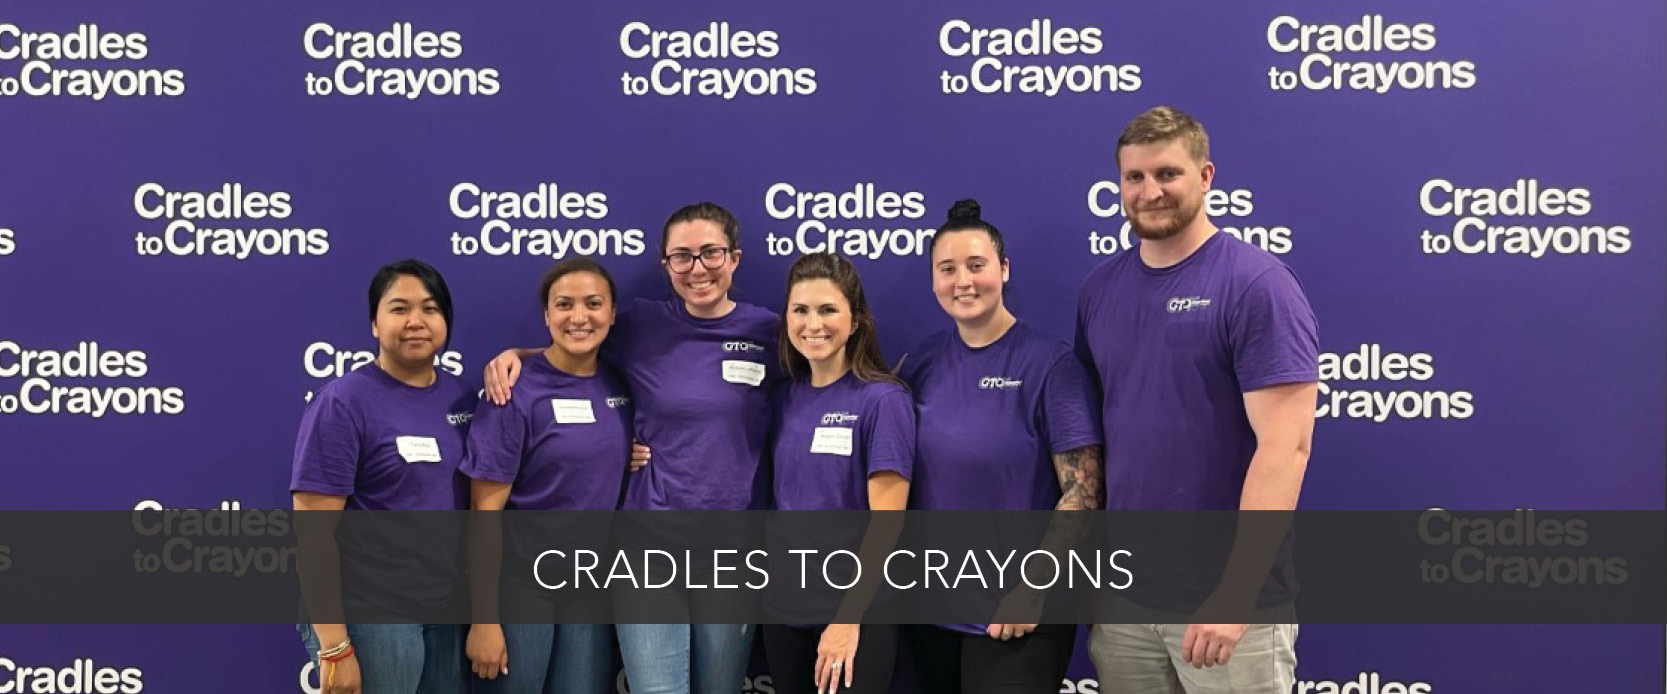 Photo of team volunteering at Cradles to Crayons